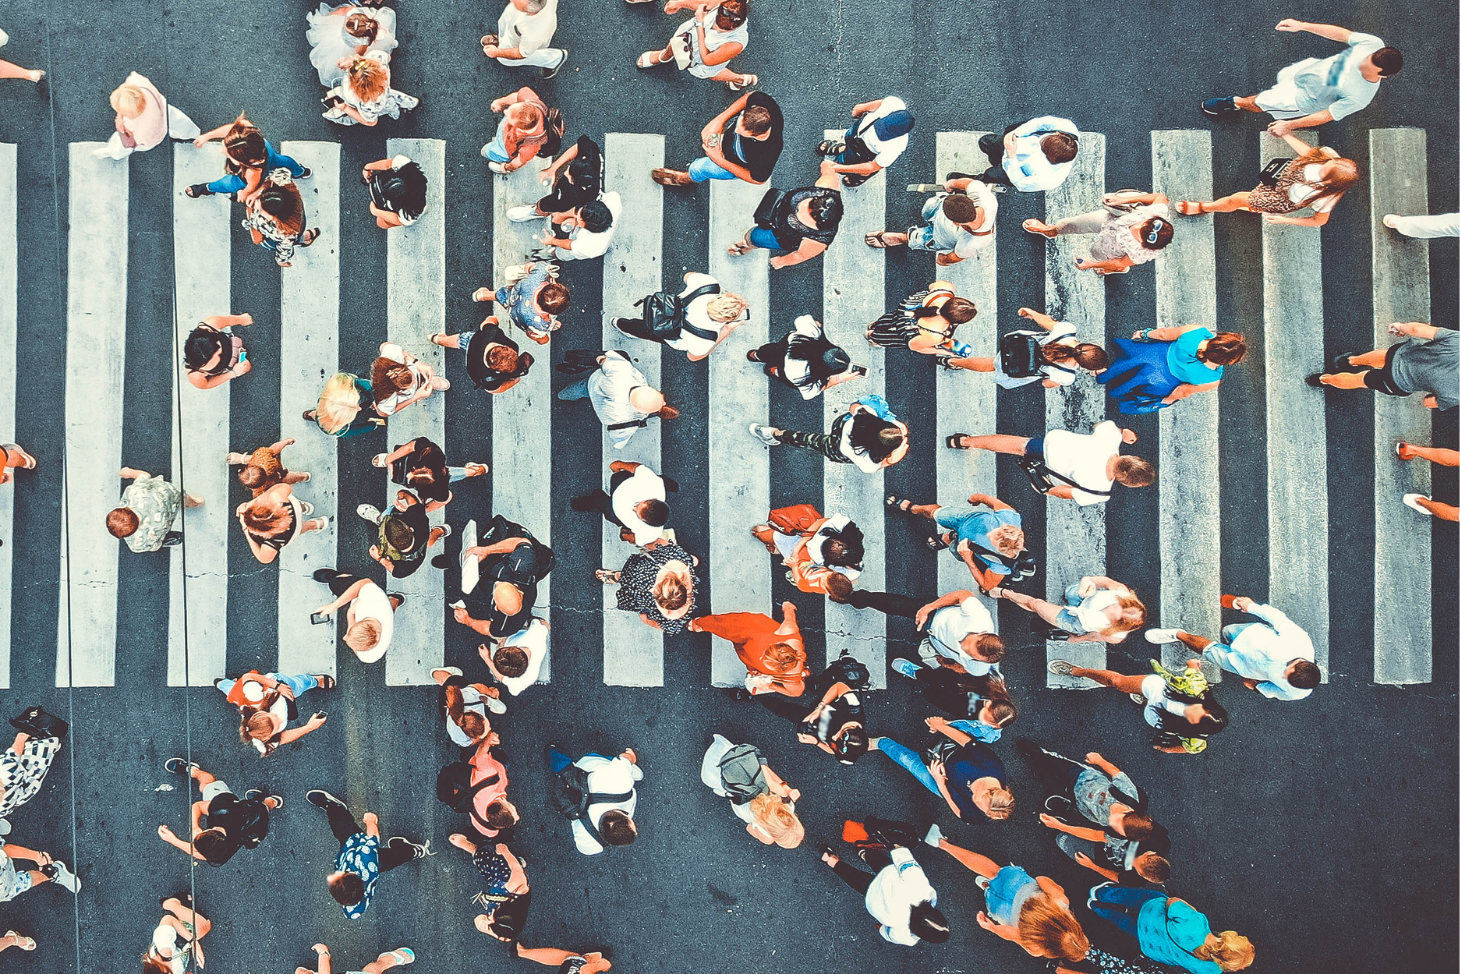 Overhead view of pedestrians in a crosswalk